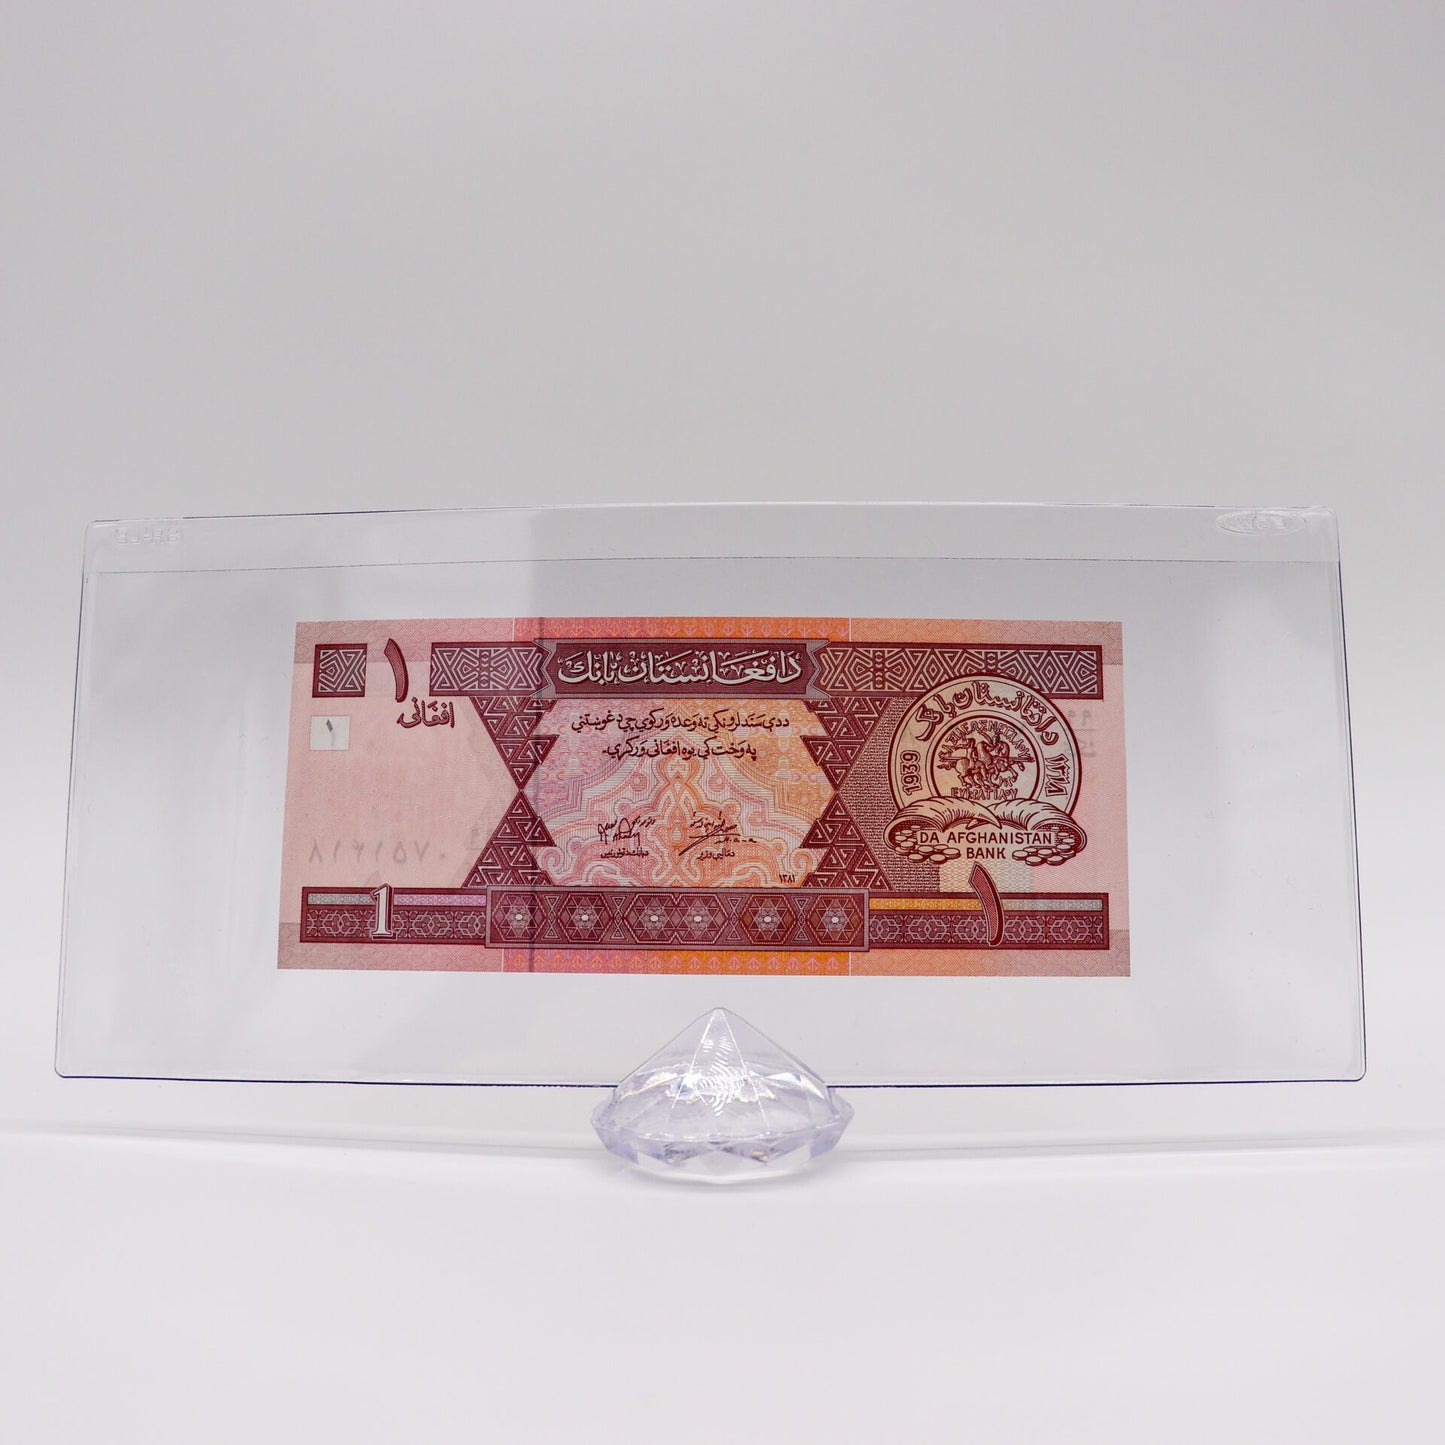 One Afghani Da Afghanistan Bank Currency Note, Mint